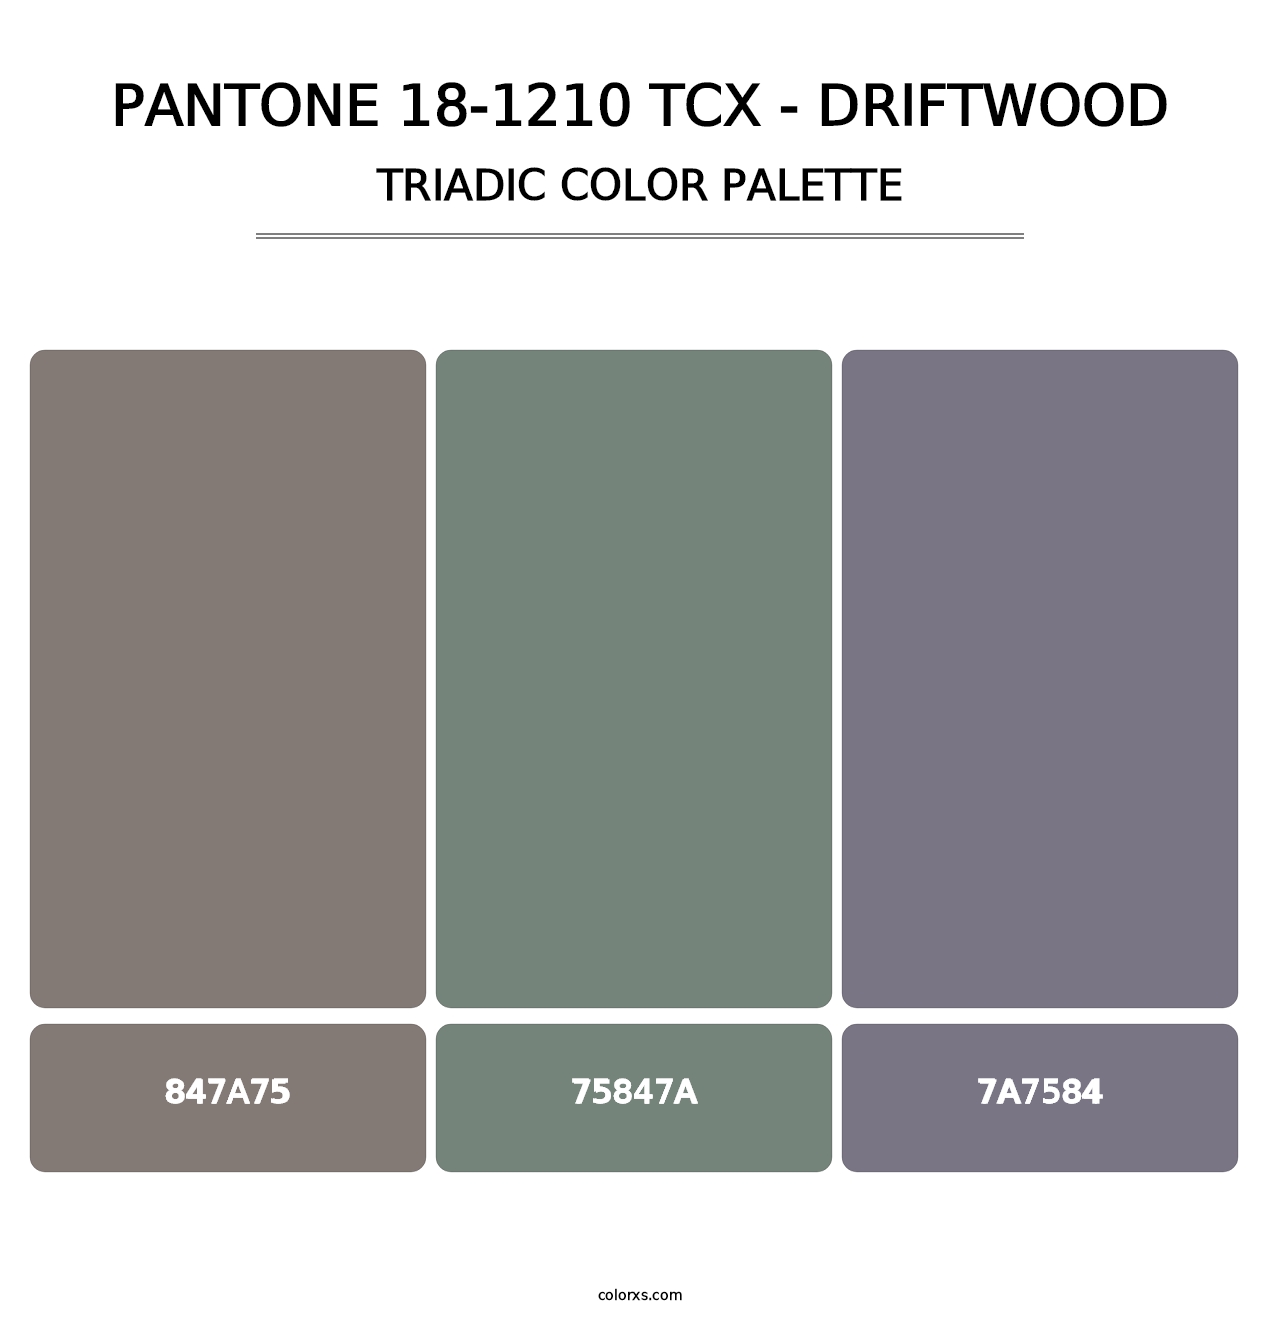 PANTONE 18-1210 TCX - Driftwood - Triadic Color Palette